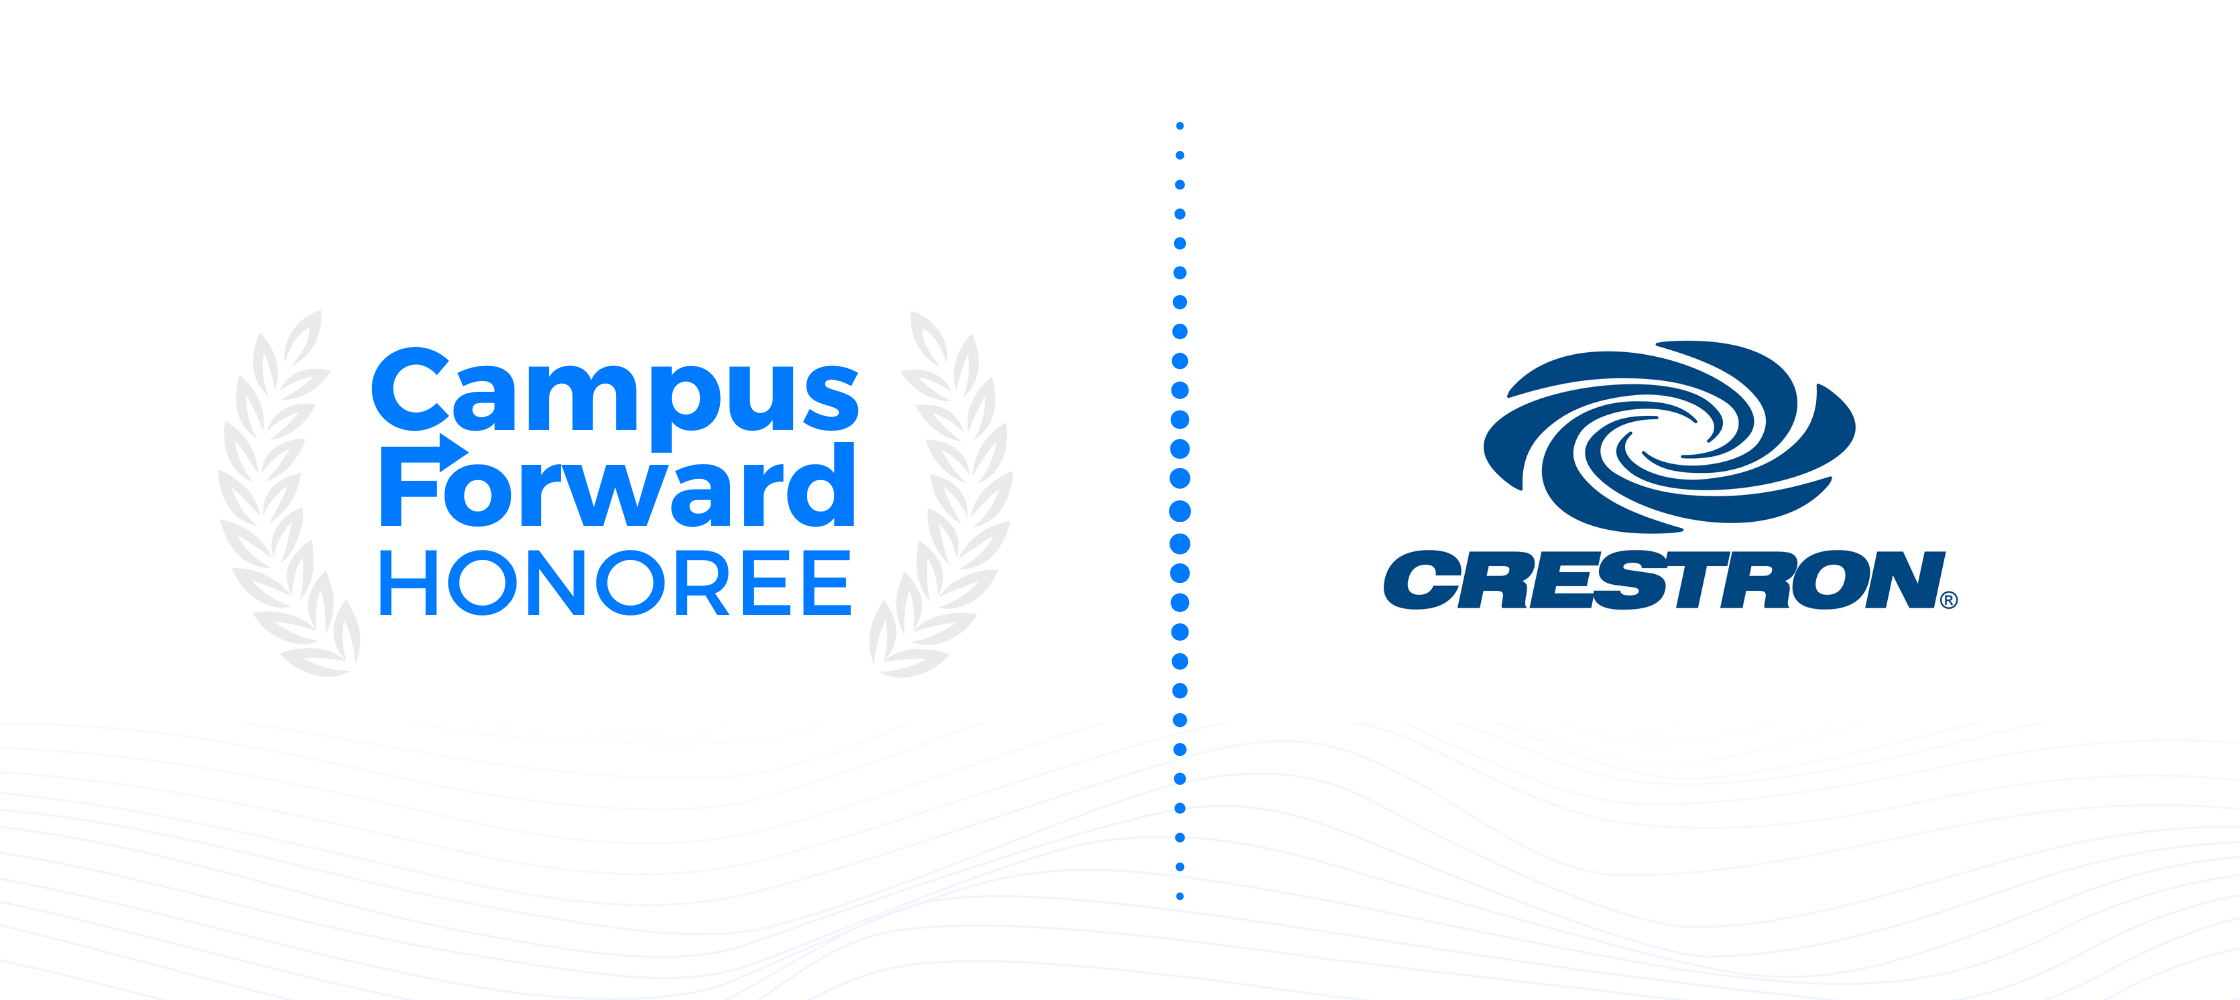 Campus Forward Honoree - Crestron